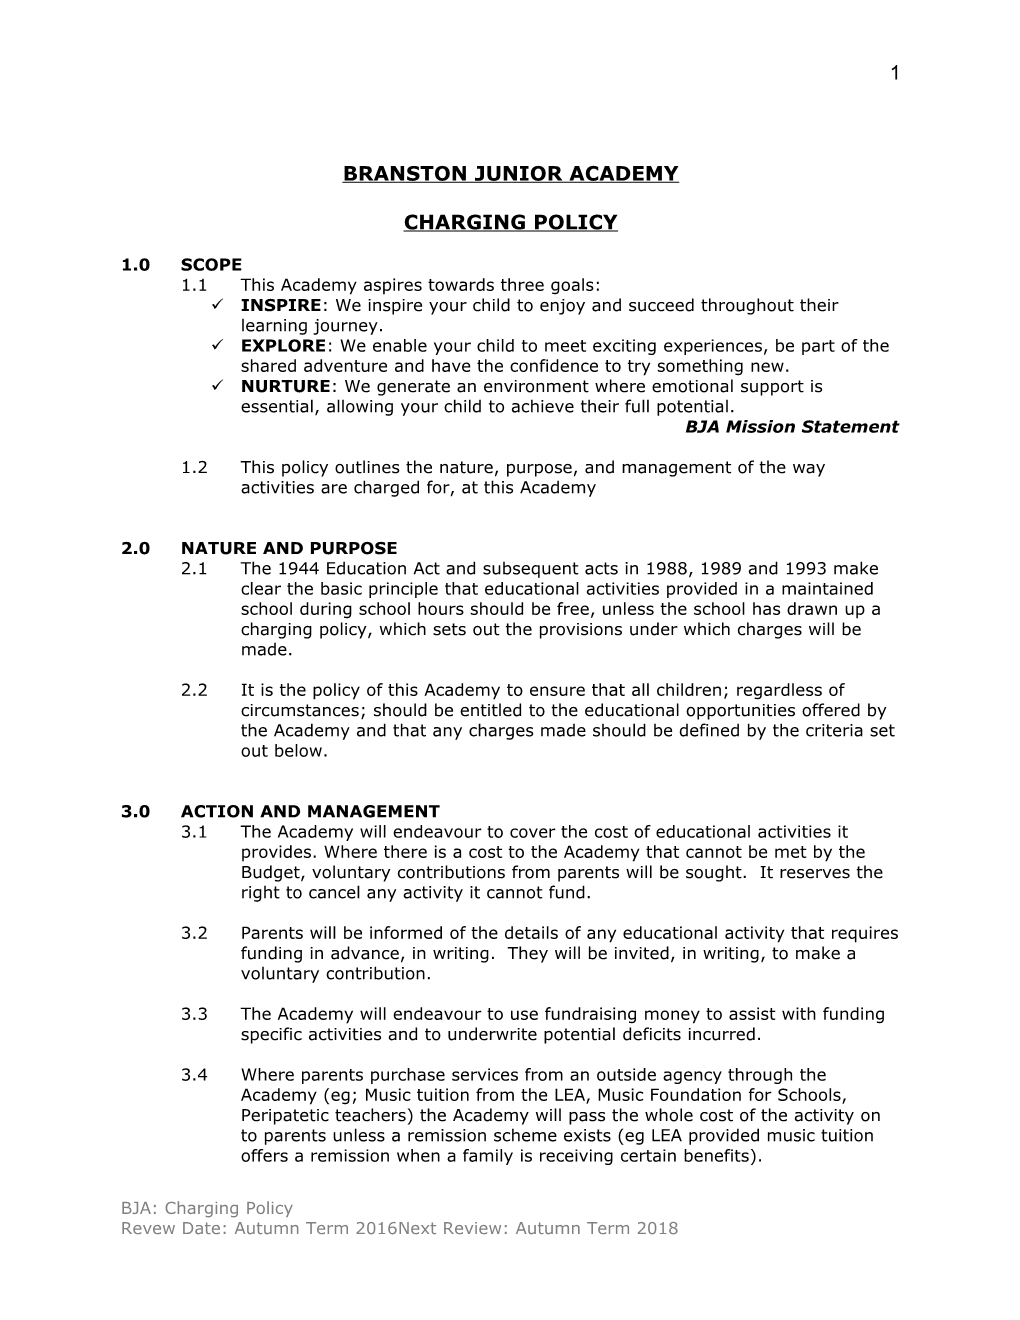 Branston Junior School Charging Policy